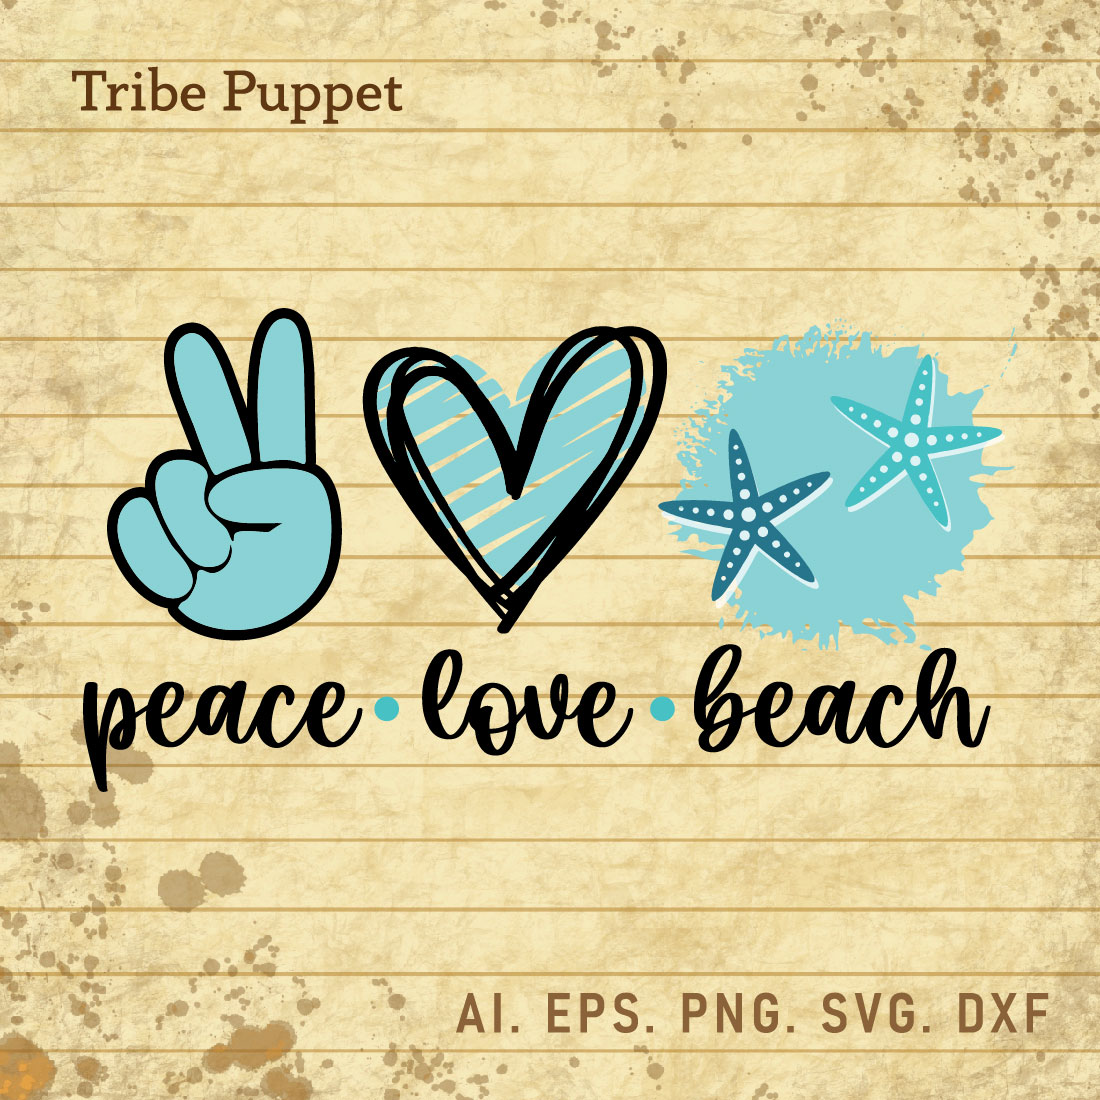 Peace Love Beach cover image.